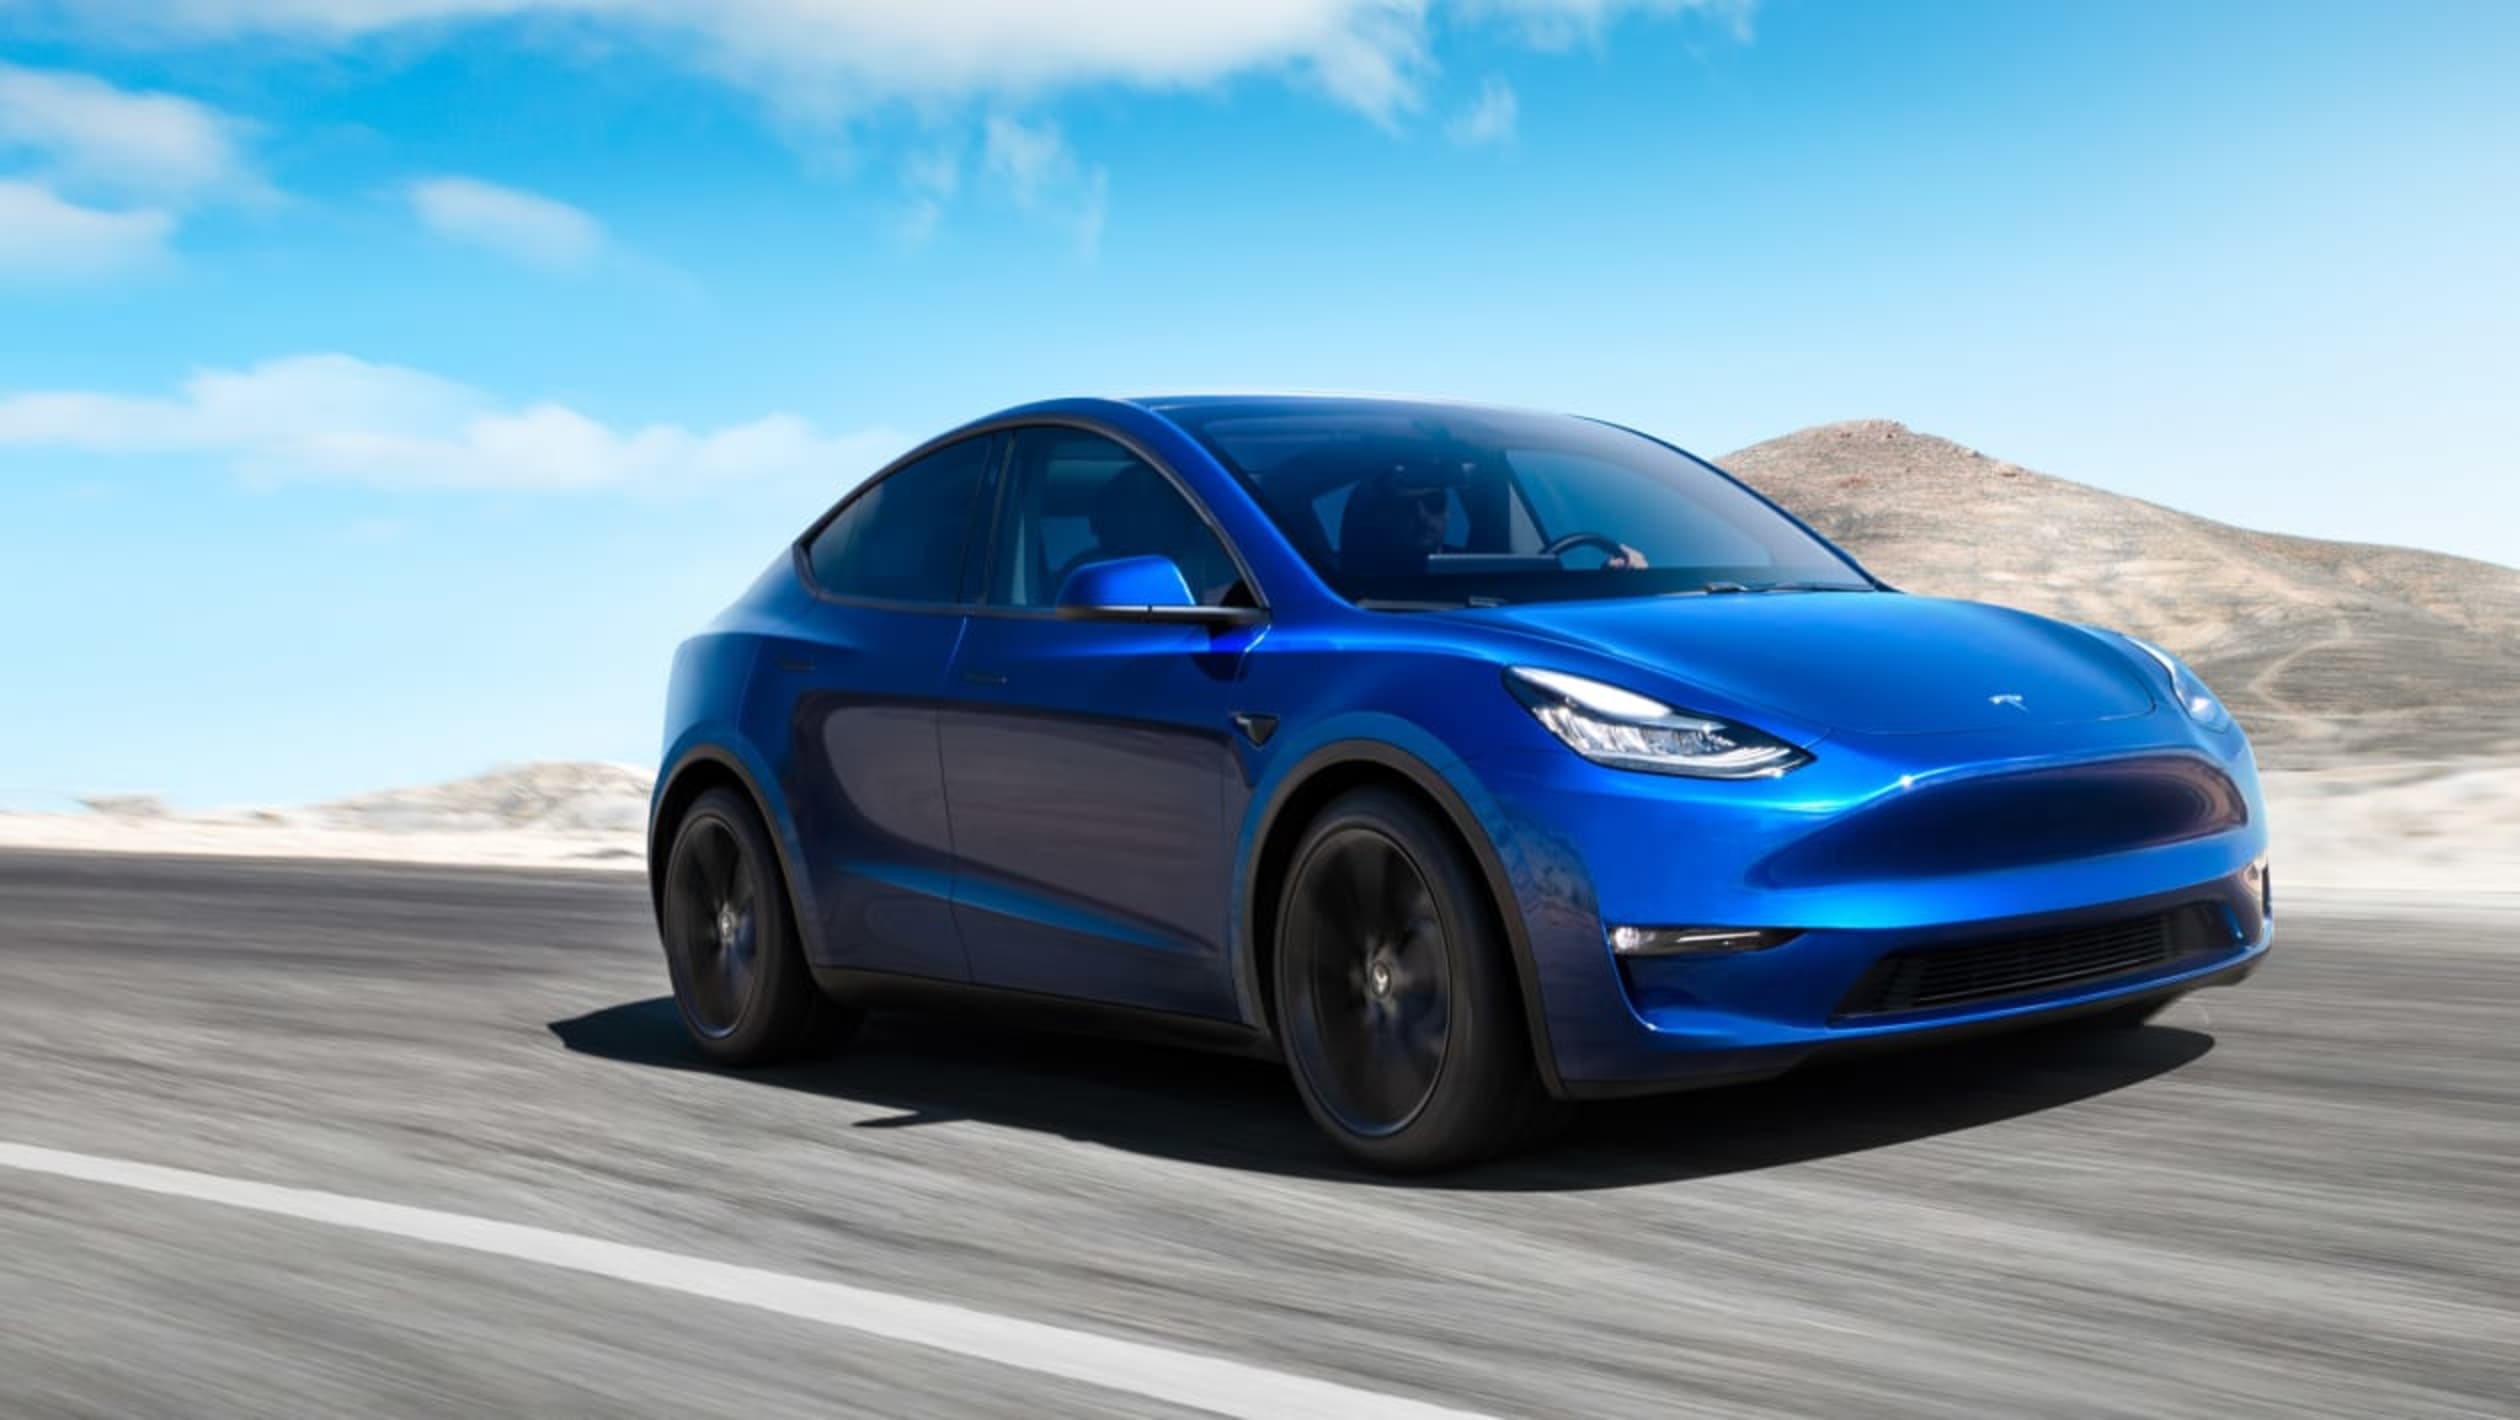 aria-label="Future electric cars 2020 3"